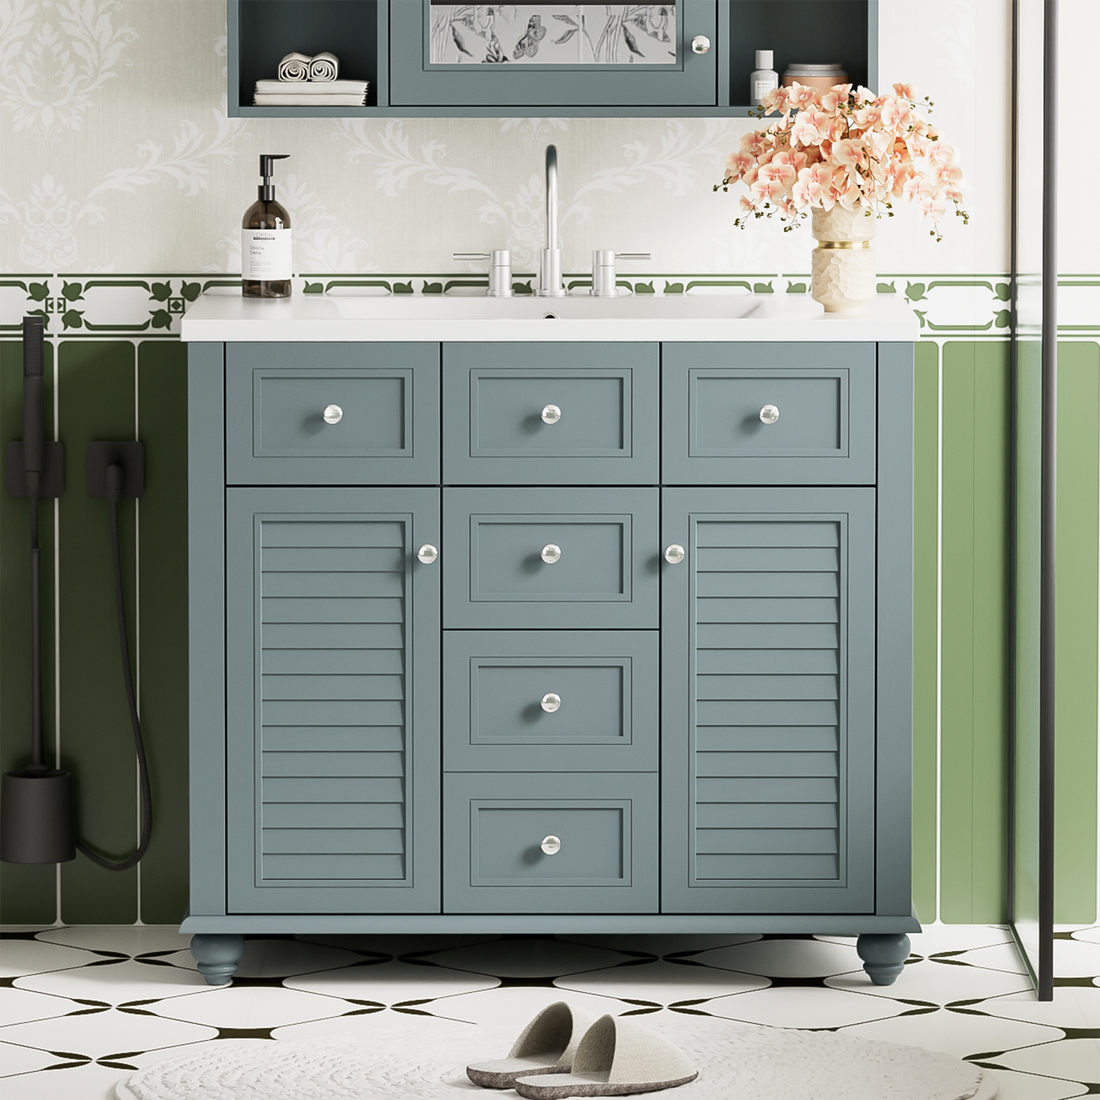 36" Bathroom Vanity Cabinet with Sink Combo Set 2-blue-2-bathroom-freestanding-french